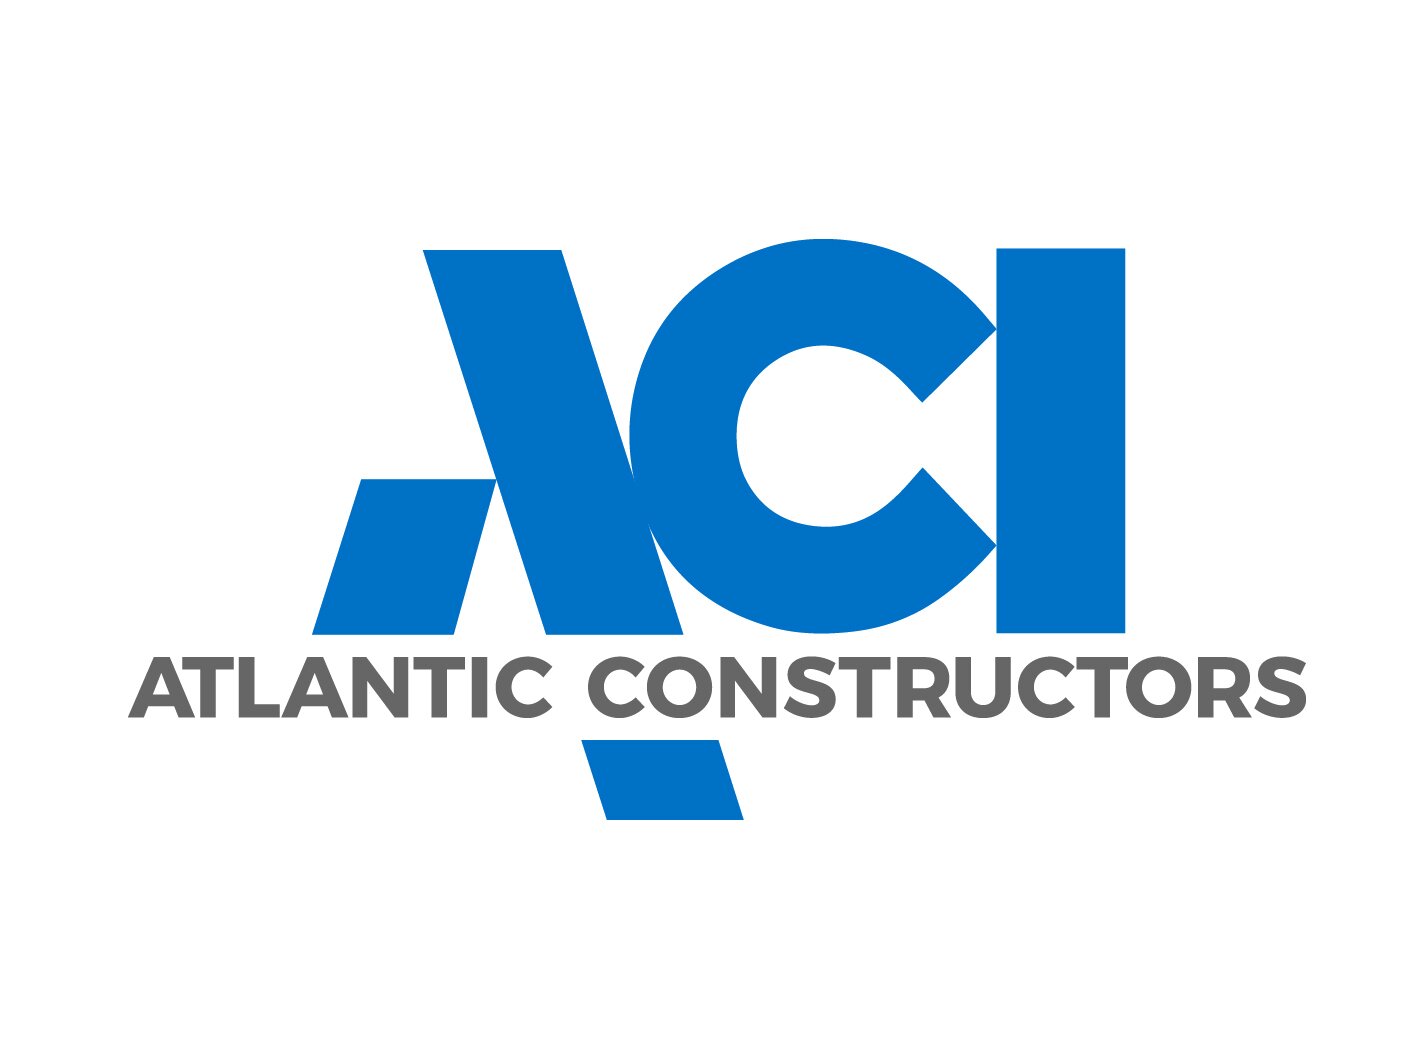 Atlantic Constructors Logo 2017.JPG